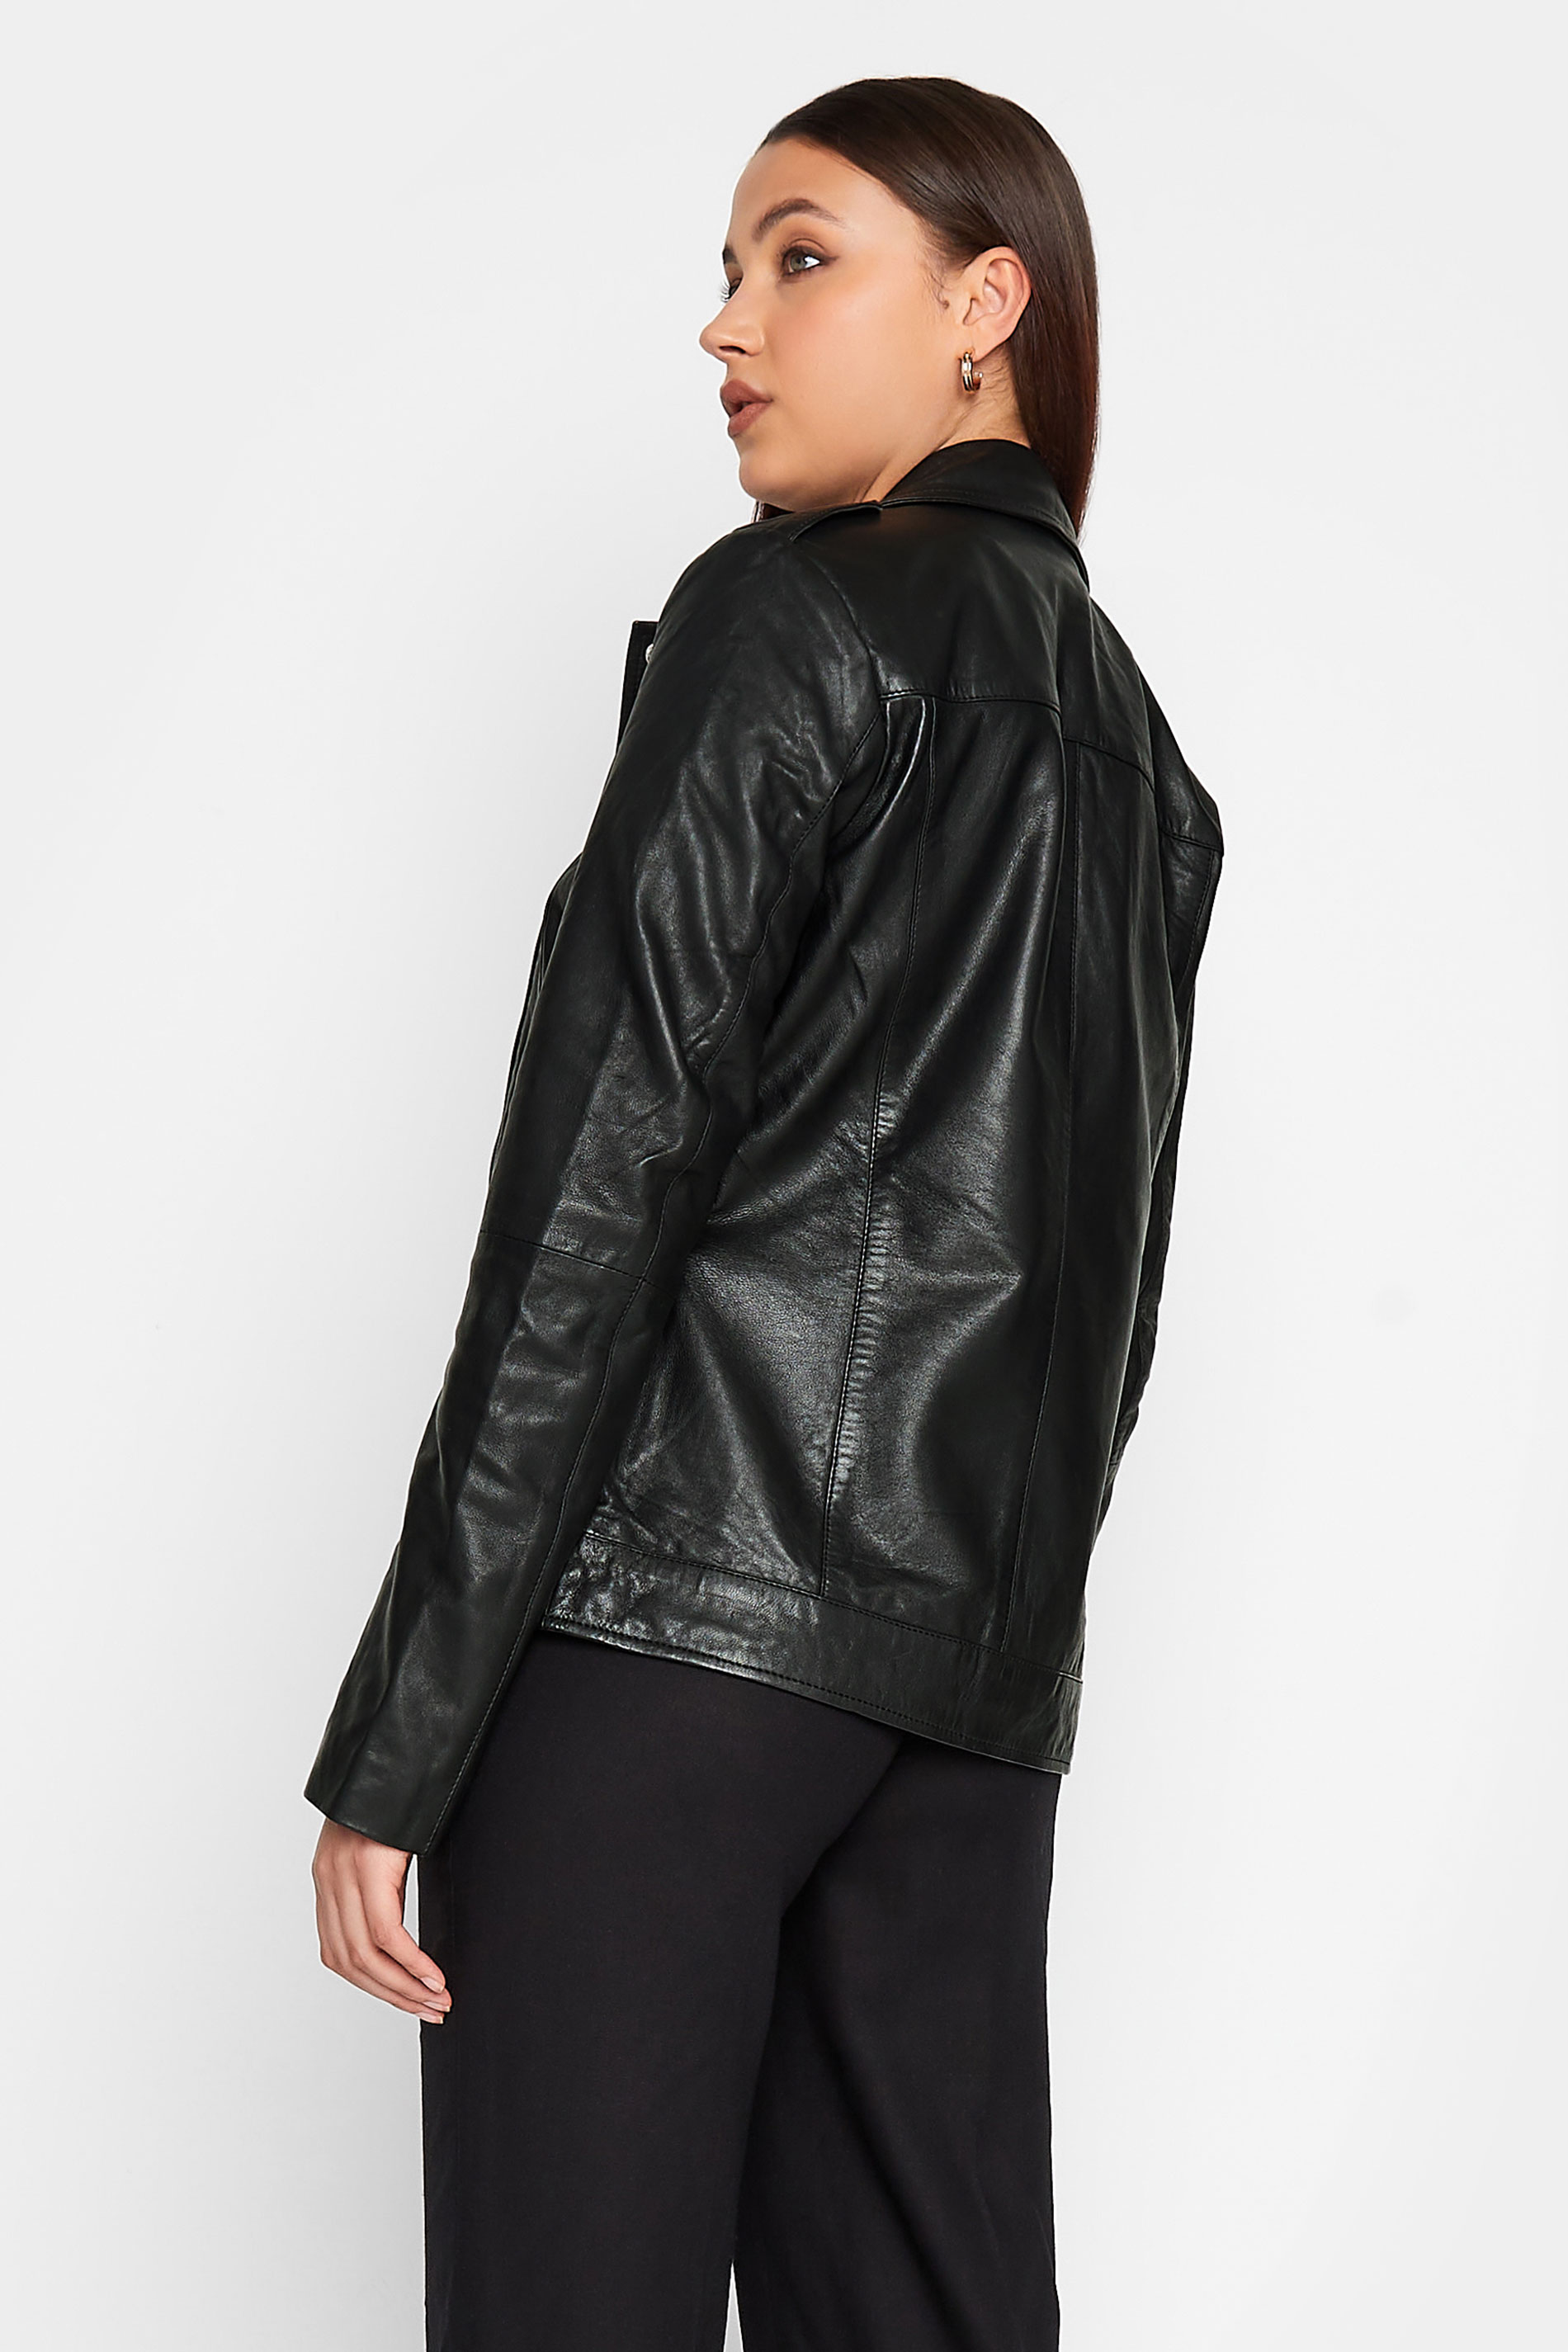 LTS Tall Women's Black Leather Biker Jacket | Long Tall Sally